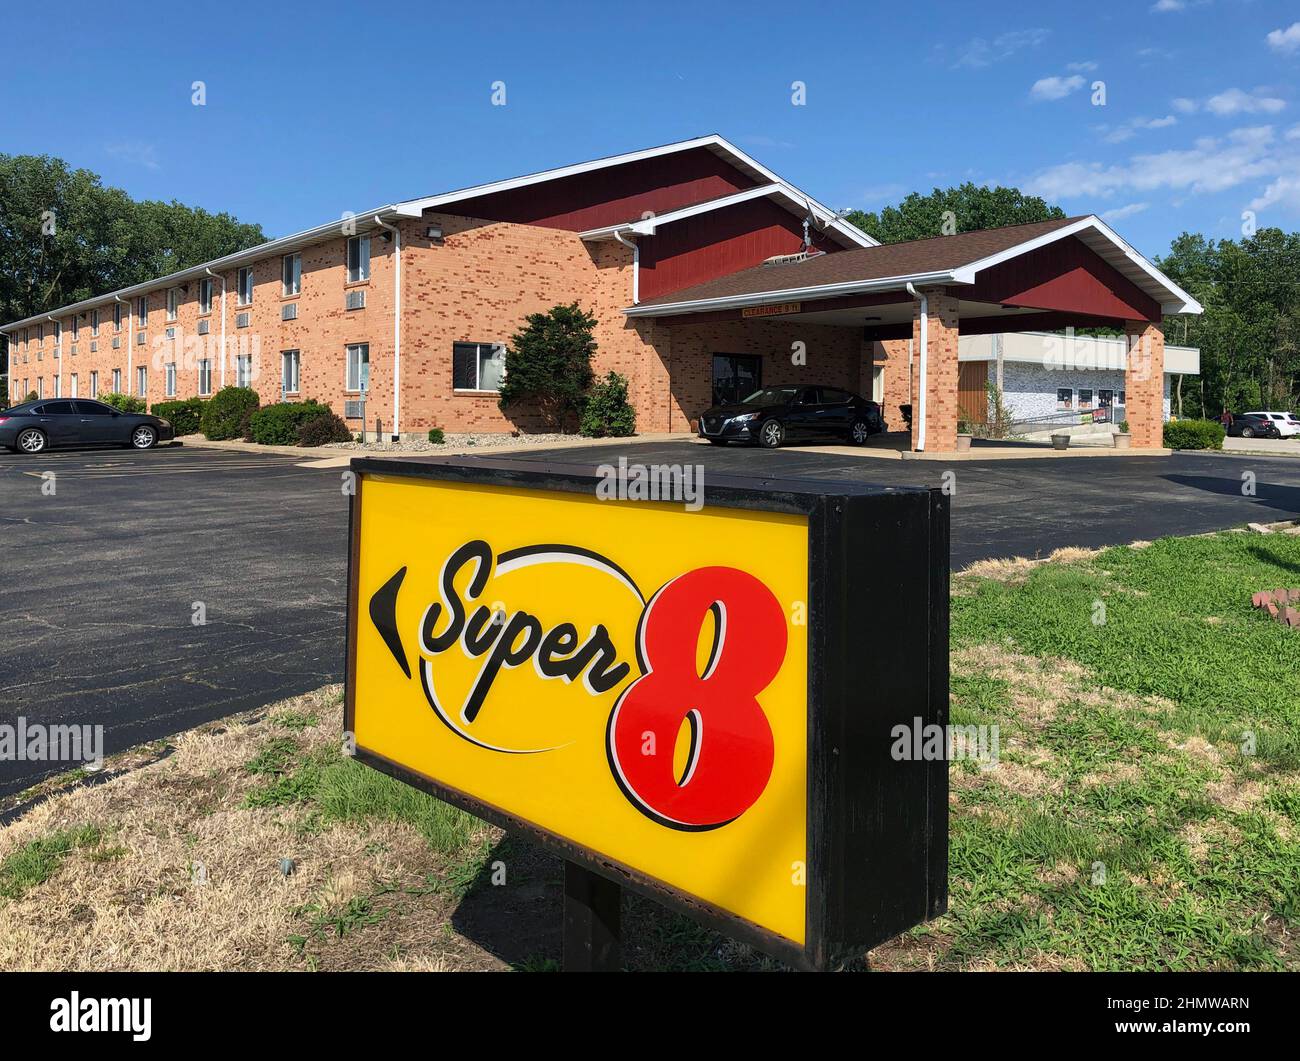 Super 8 motel in the US, 2021. Stock Photo